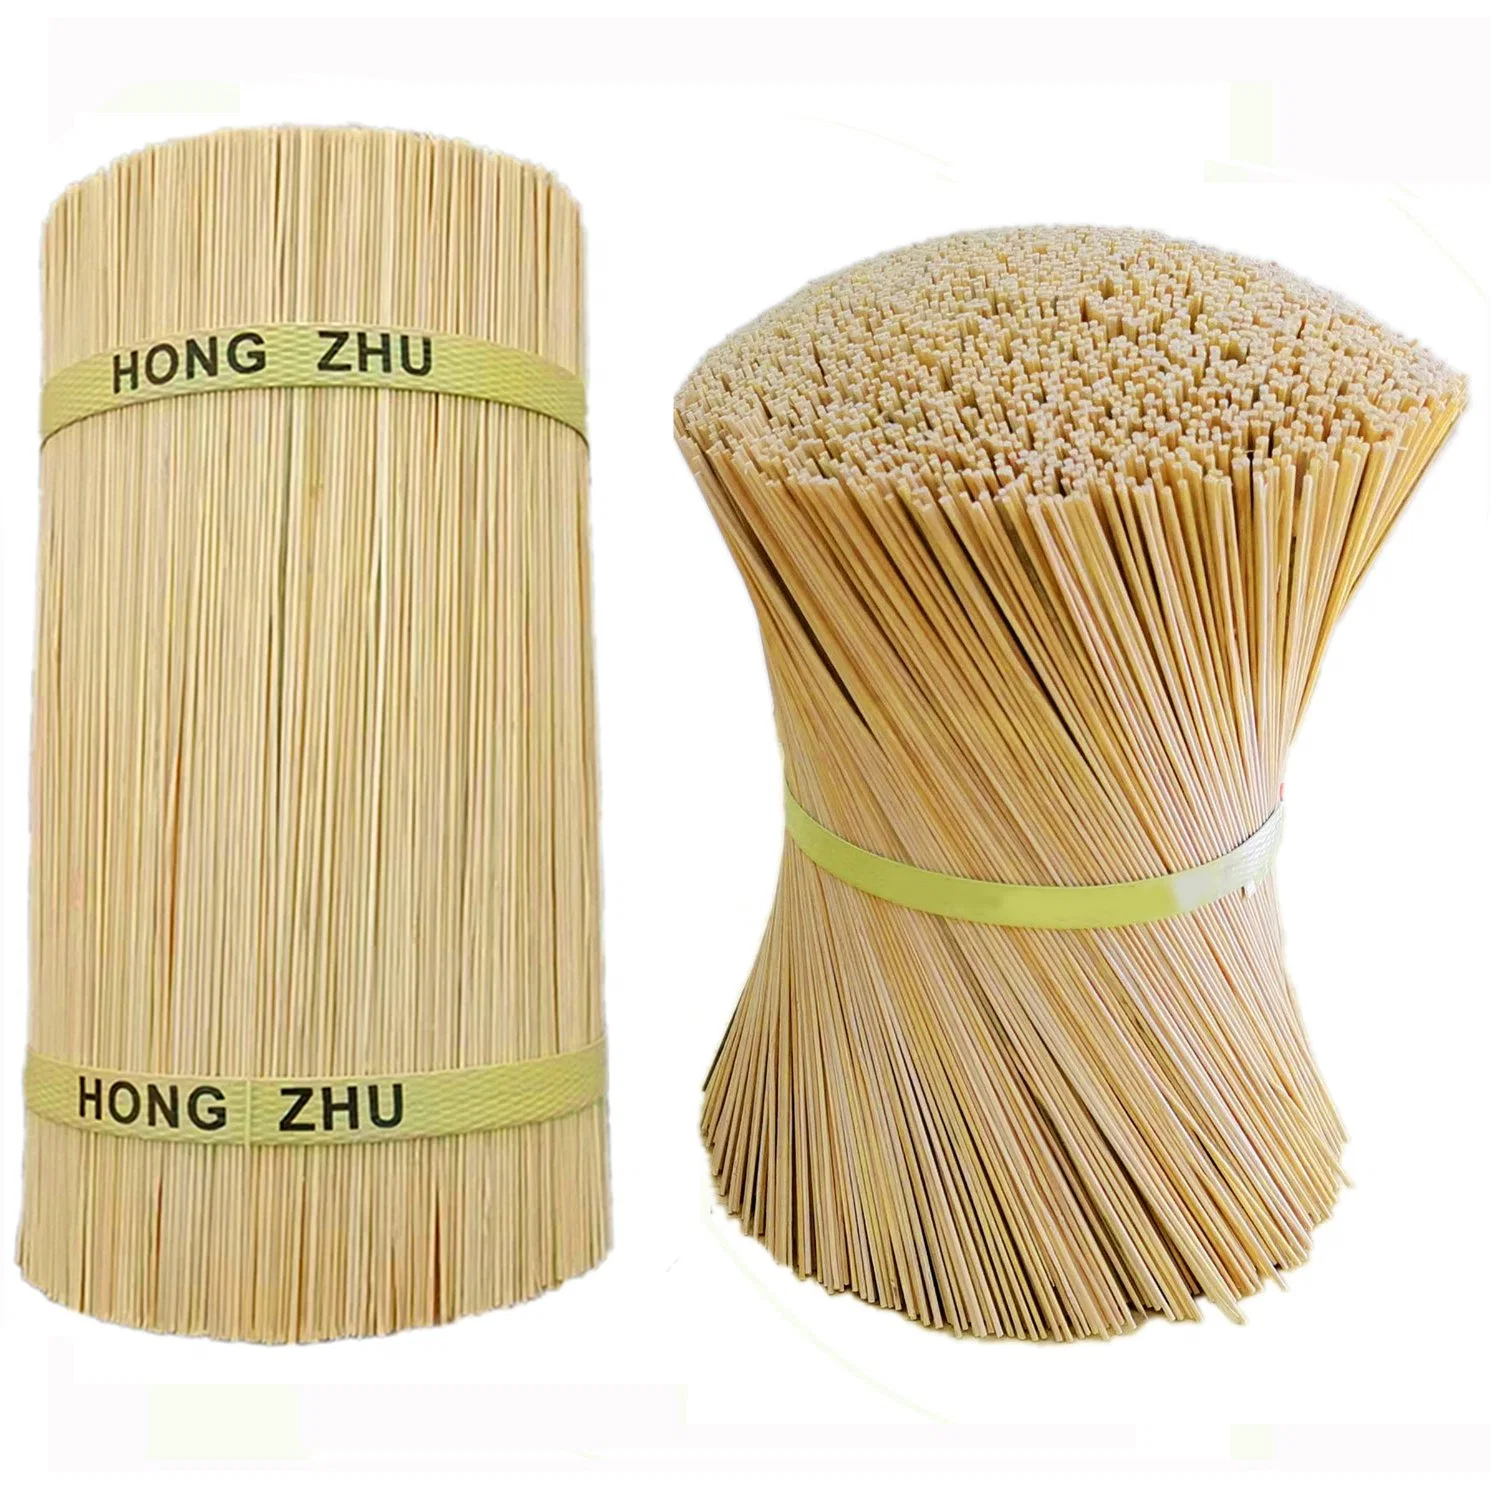 Xunwu Lianfeng Bamboo Factory 7, 8, 9, 10, 12 Zoll Agarbatti Bambusstäbchen für Räucherstäbchen